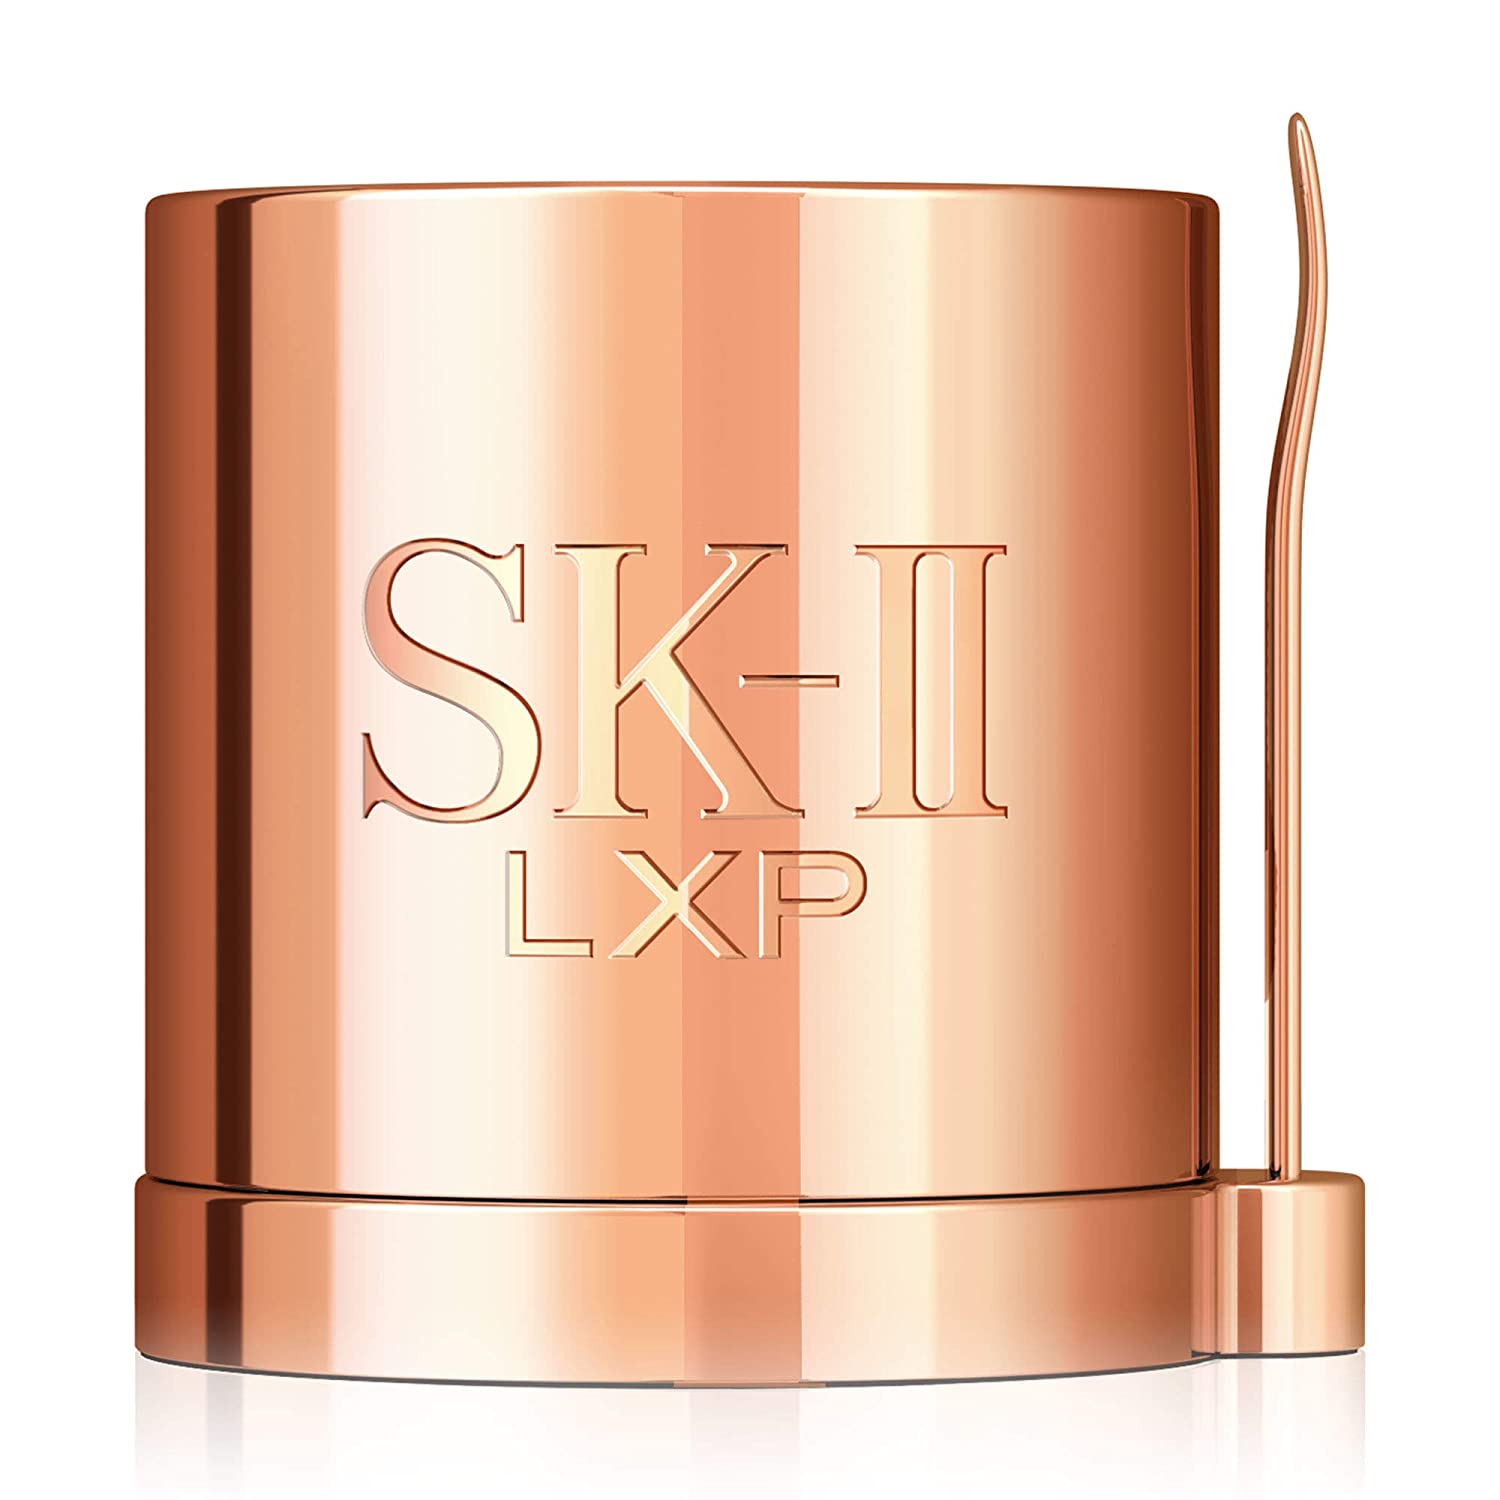 SK-II LXP Ultimate Revival Face Moisturizing Eye Cream - 1.6 Oz